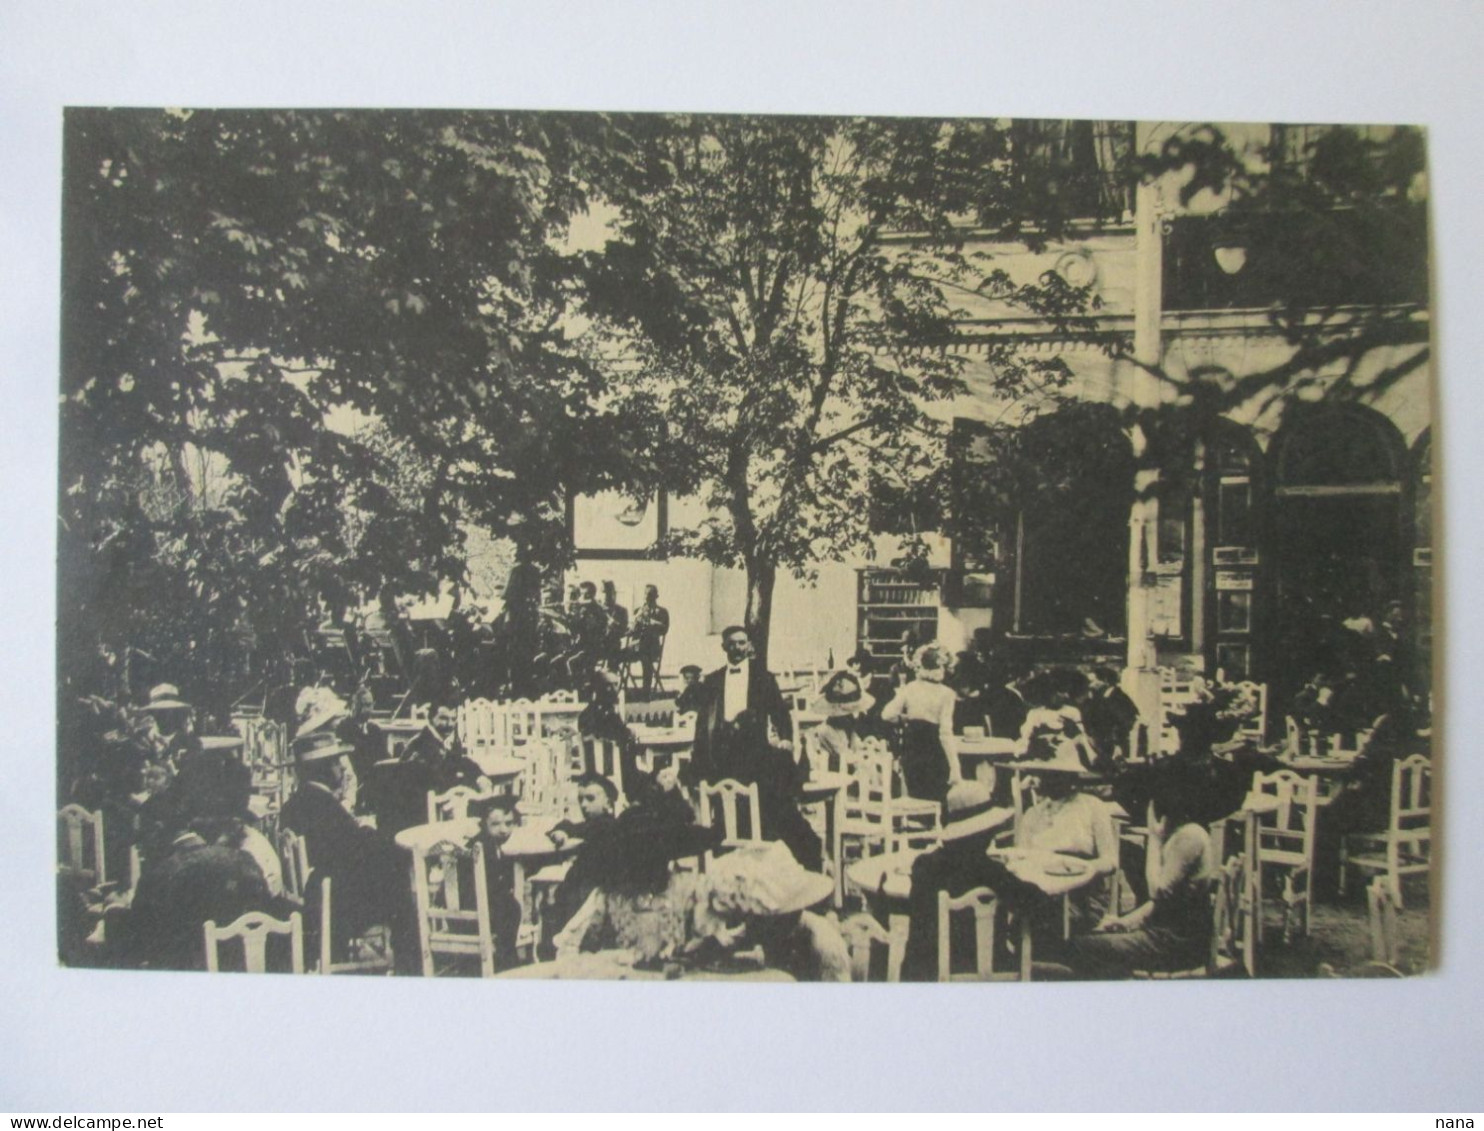 Romania-Sibiu:La Confiserie Dans Le Parc C.p.vers 1920/Confectionery In The Park Unused Postcard 1920s - Romania